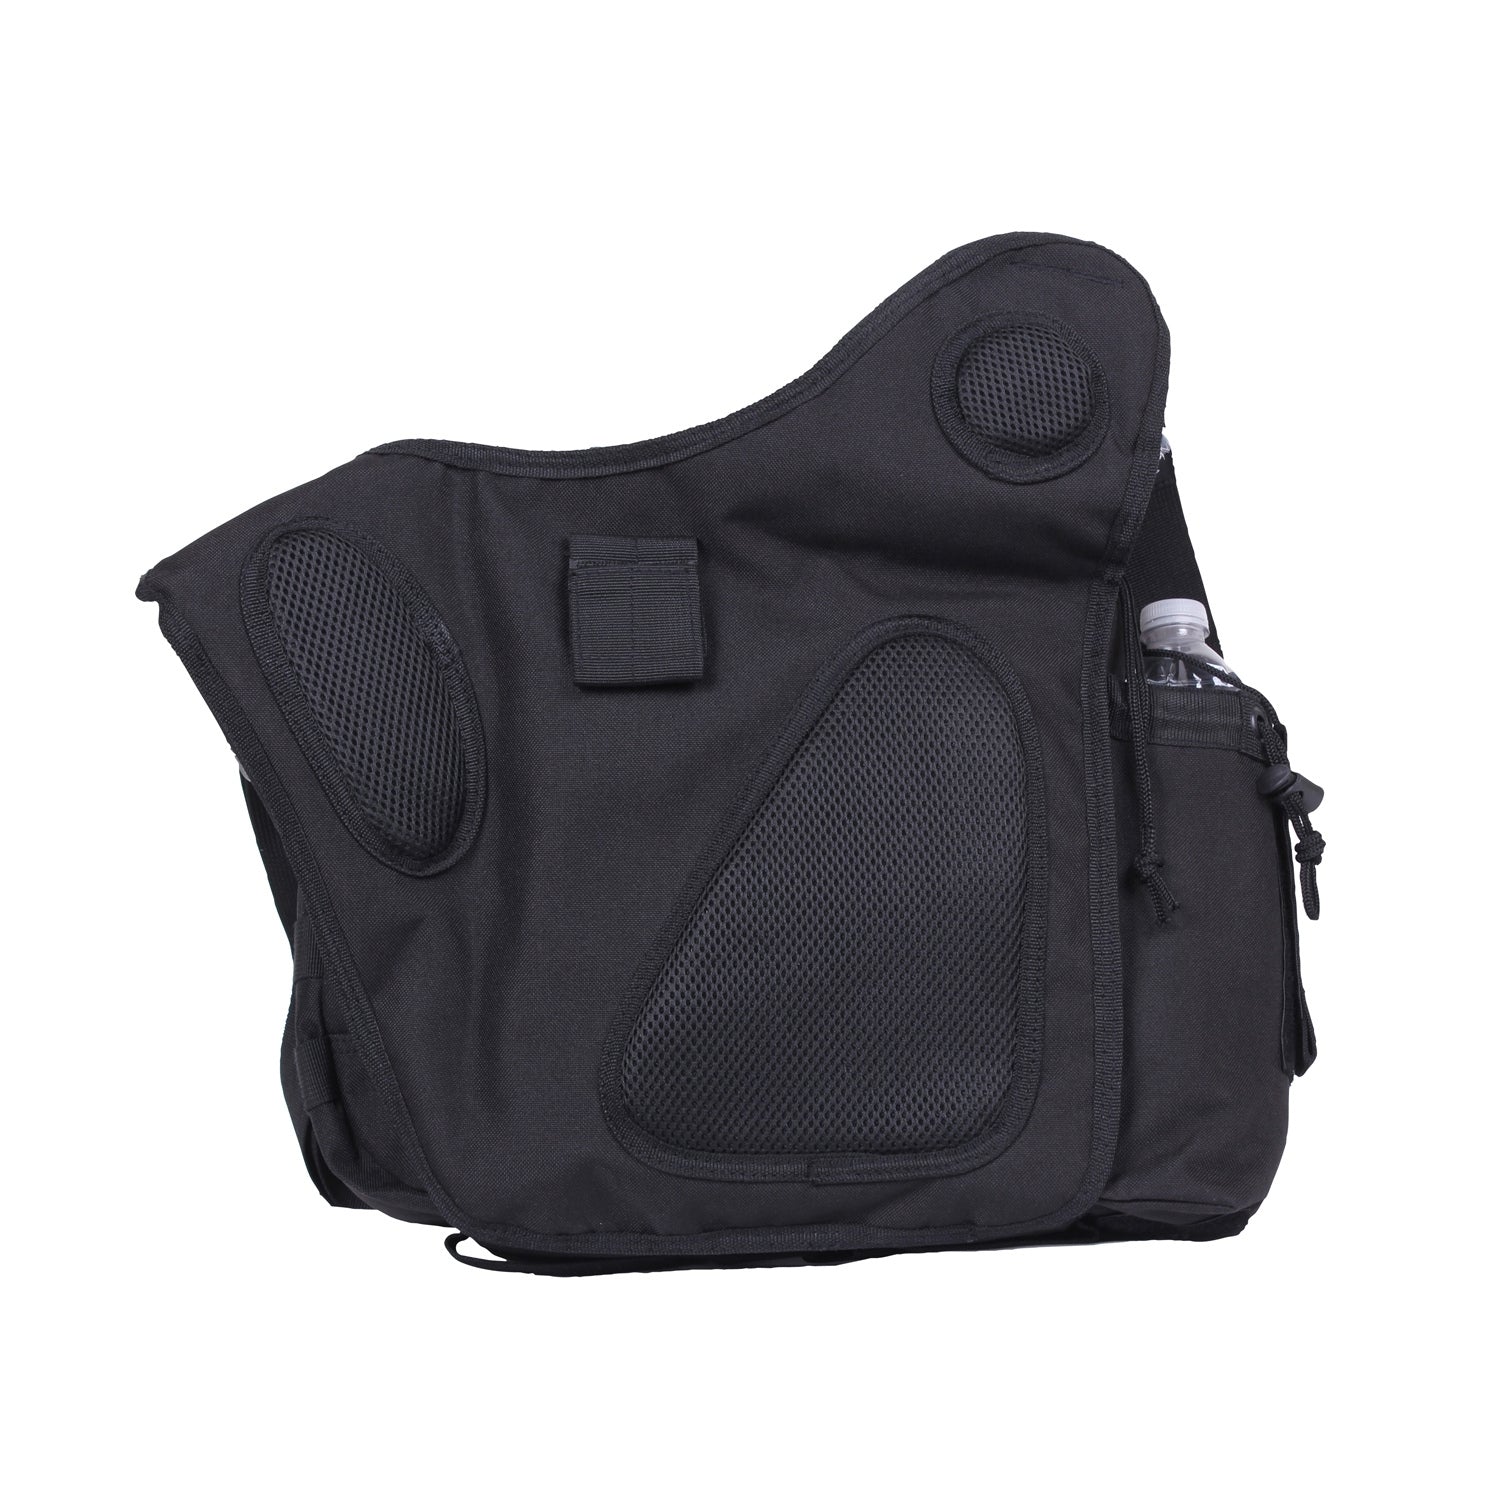 Rothco XL Advanced Tactical Shoulder Bag | All Security Equipment - 2